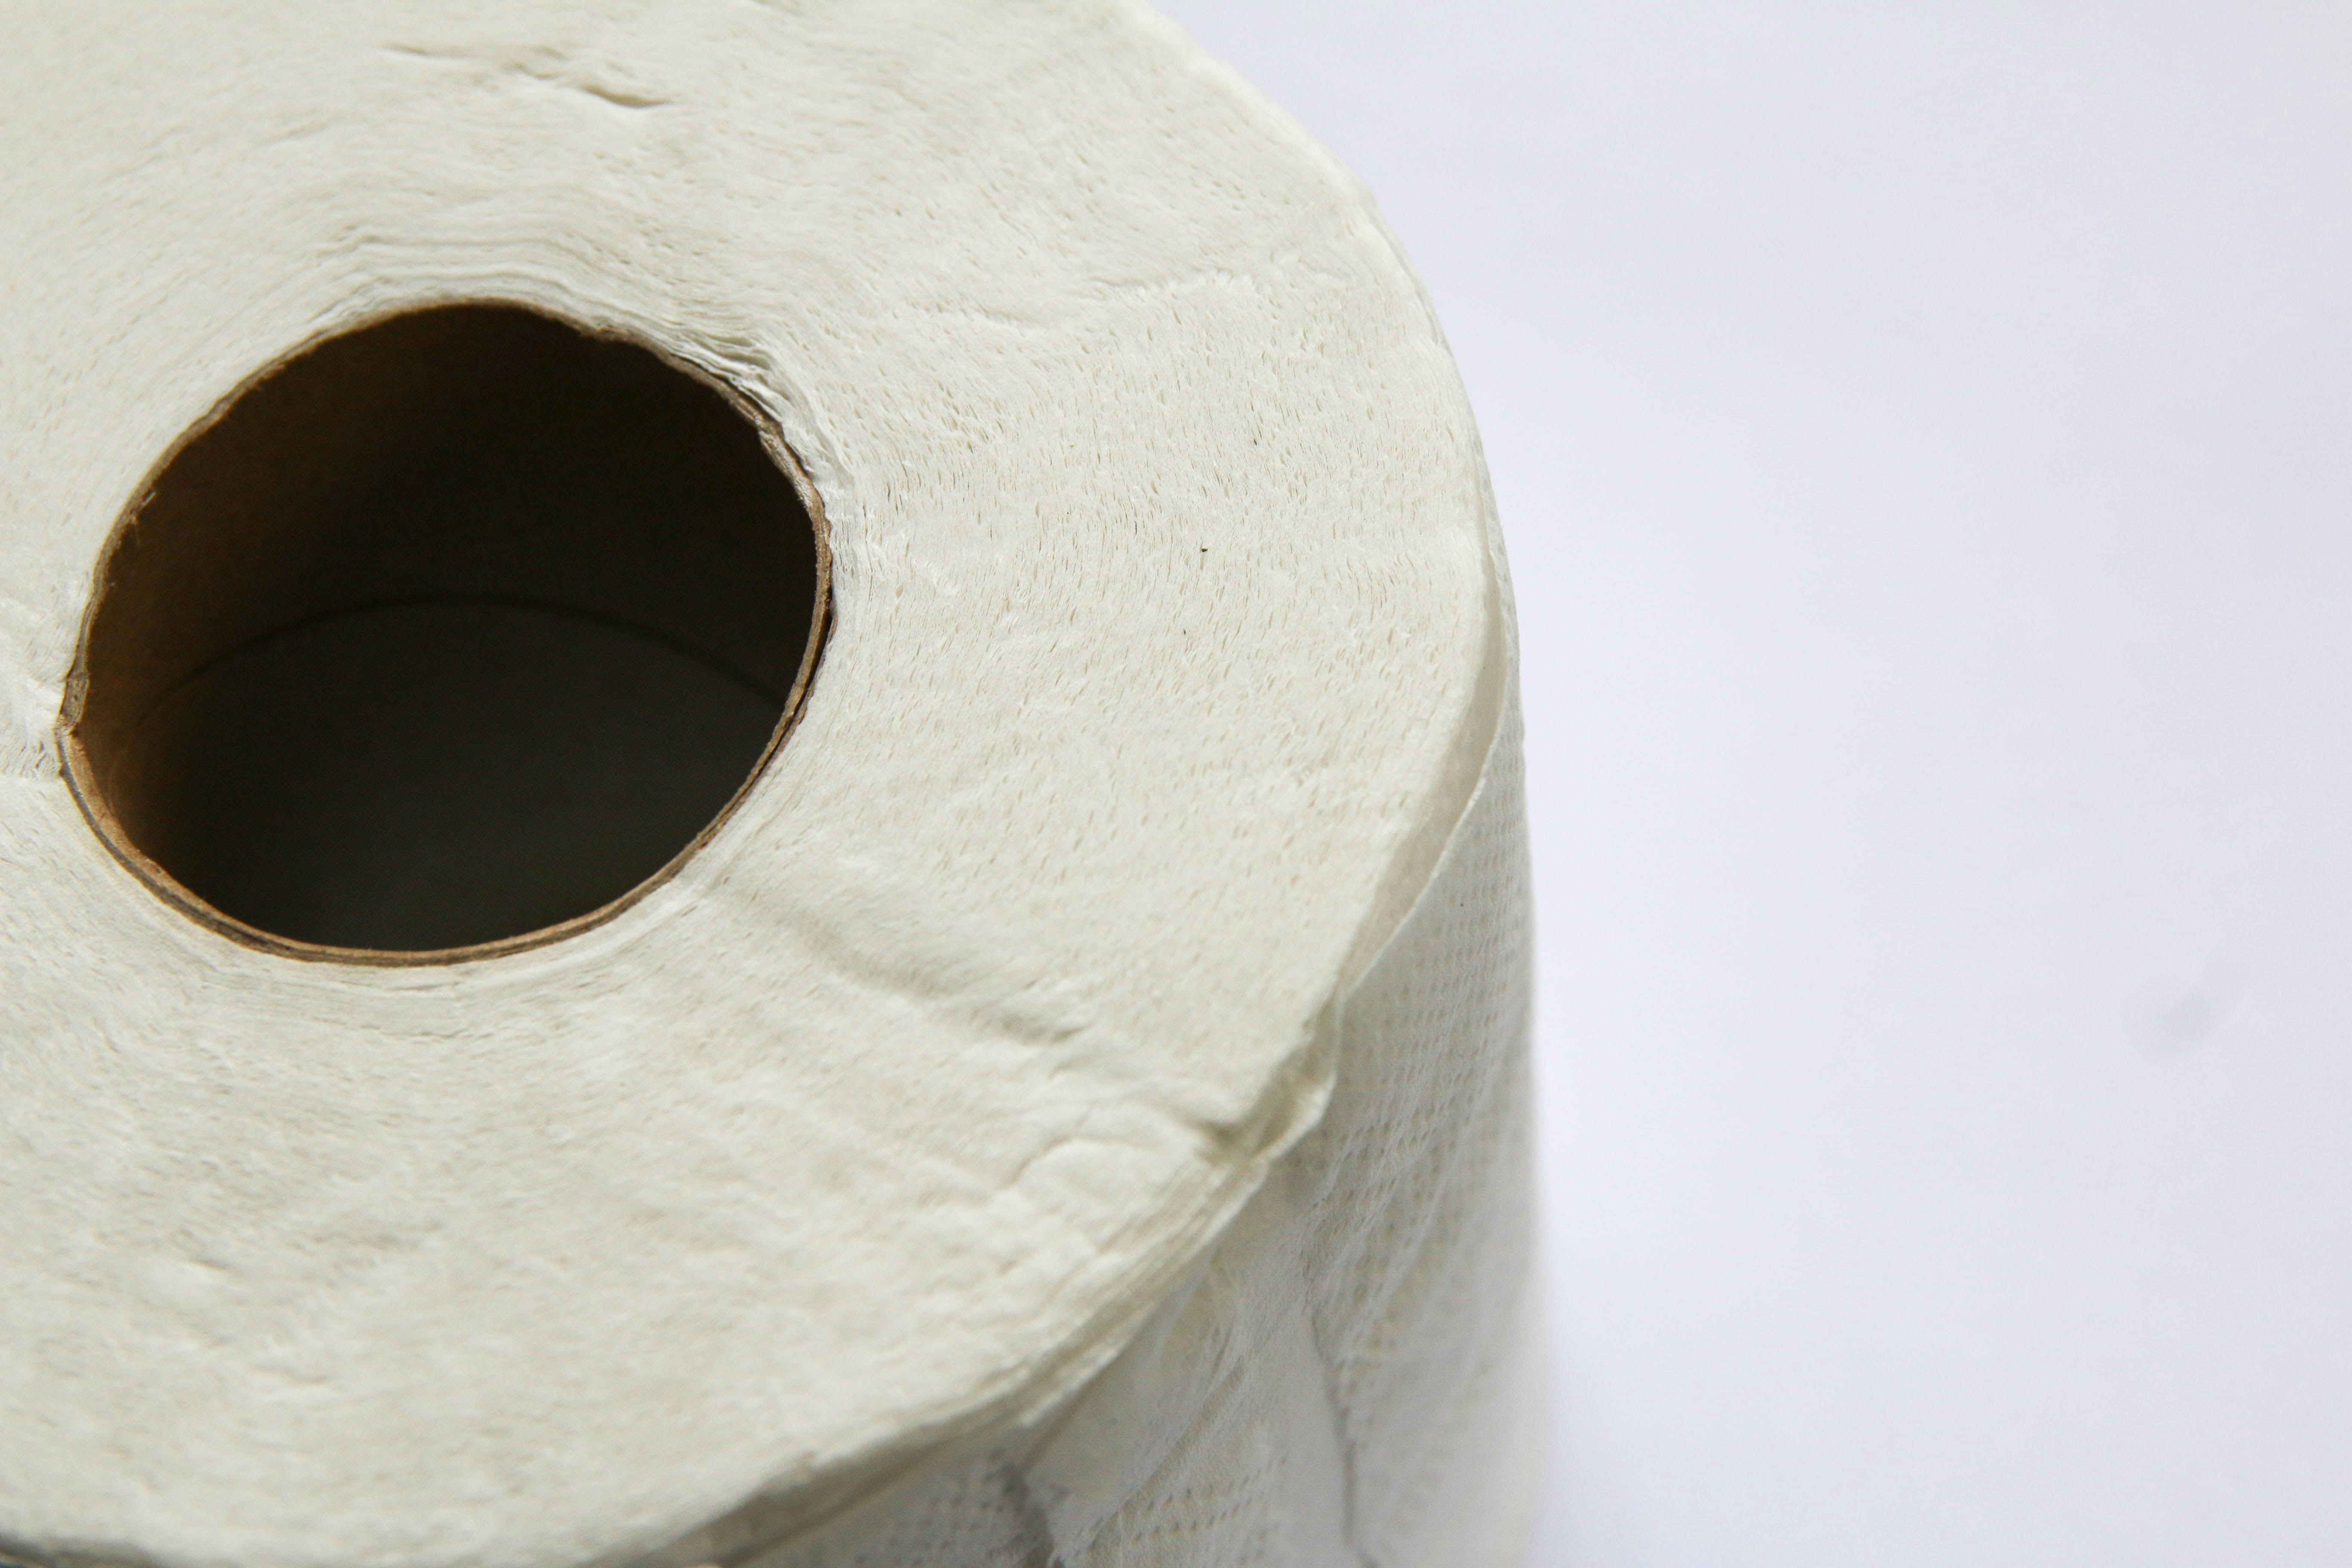 white toilet paper roll on white table